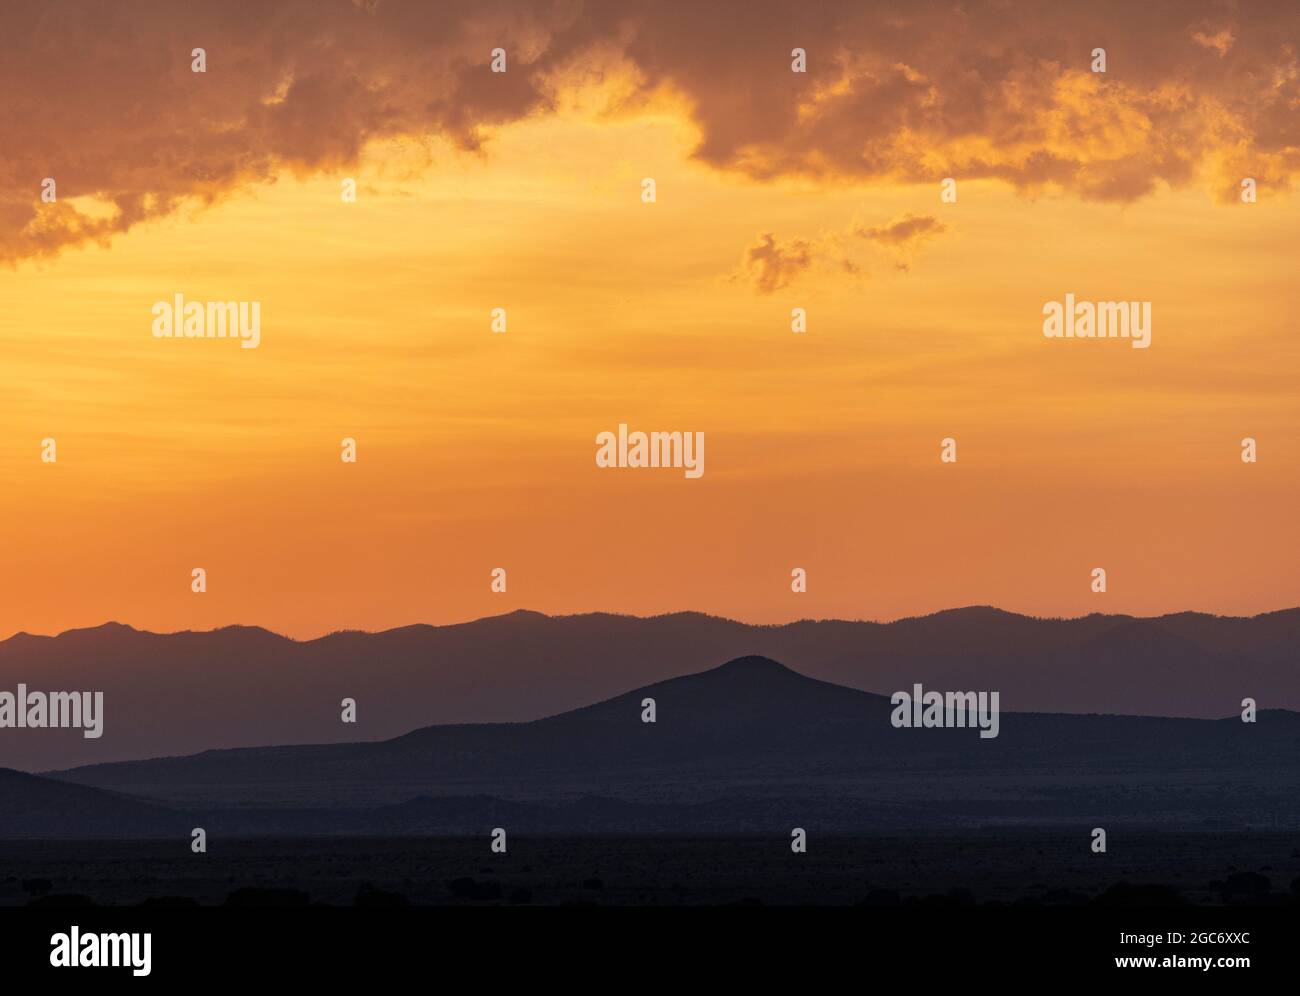 USA, New Mexico, Santa Fe, El Dorado, Sonnenuntergang Himmel mit Wolken über Wüstenlandschaft Stockfoto